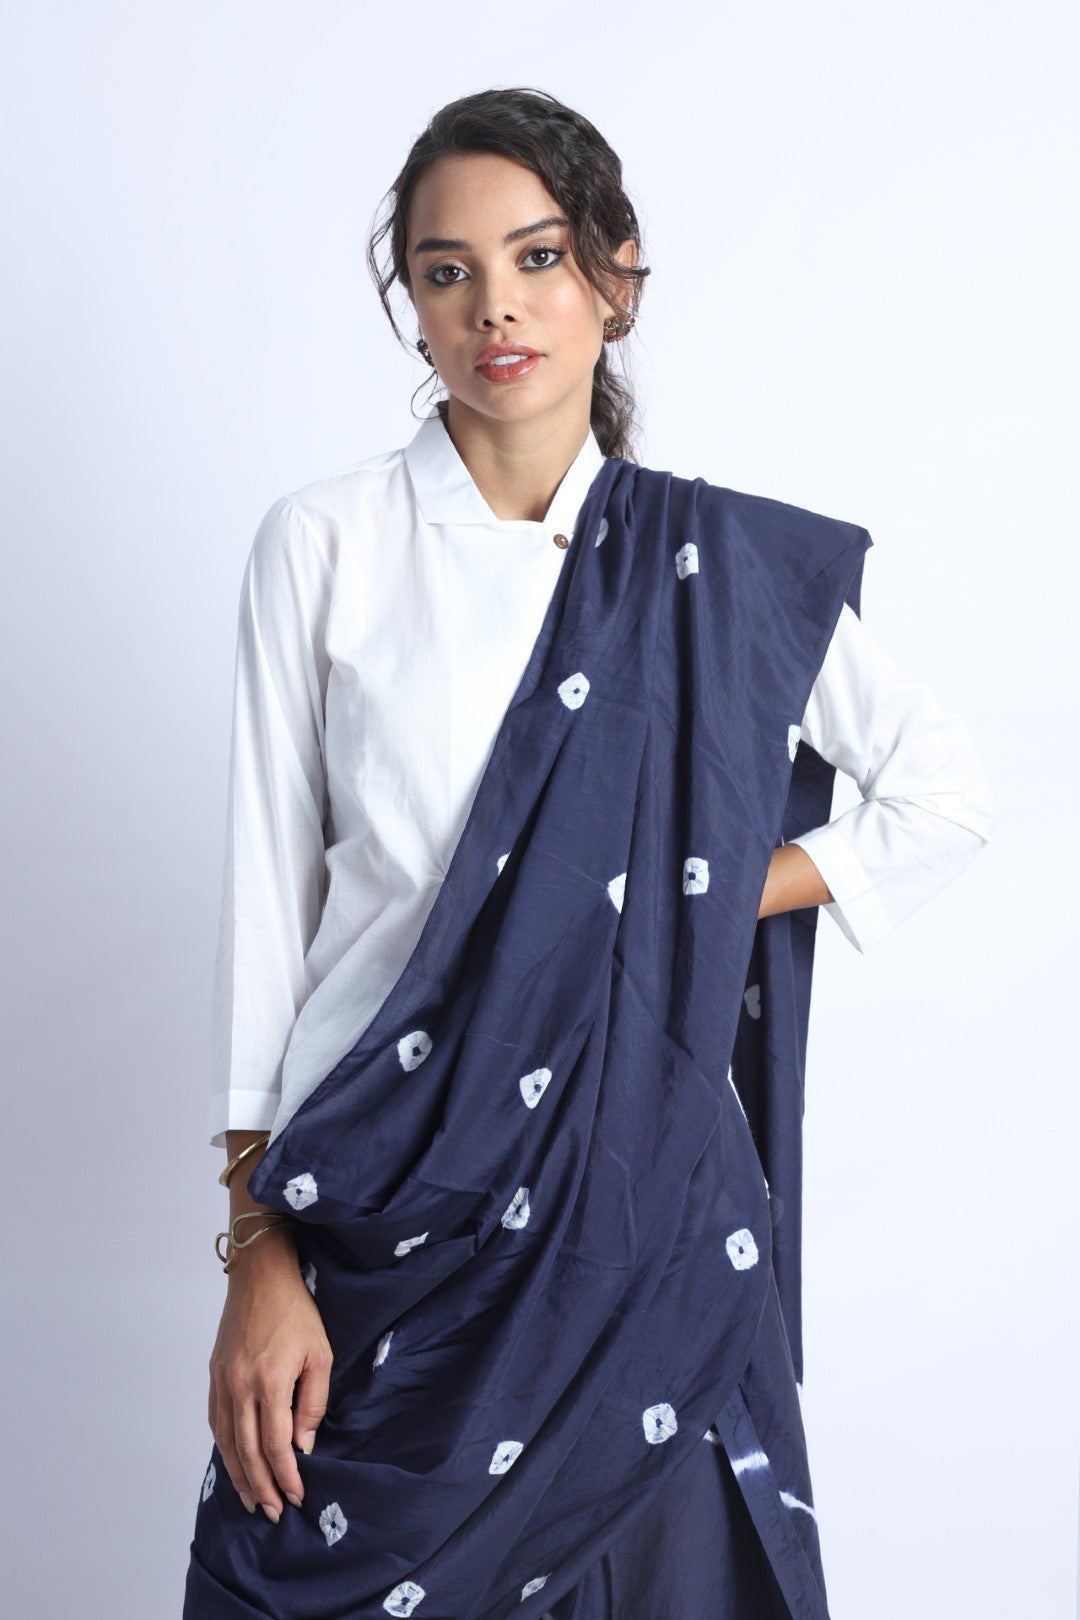 Blue Bandhani Drape Pants Saree with White Blouse